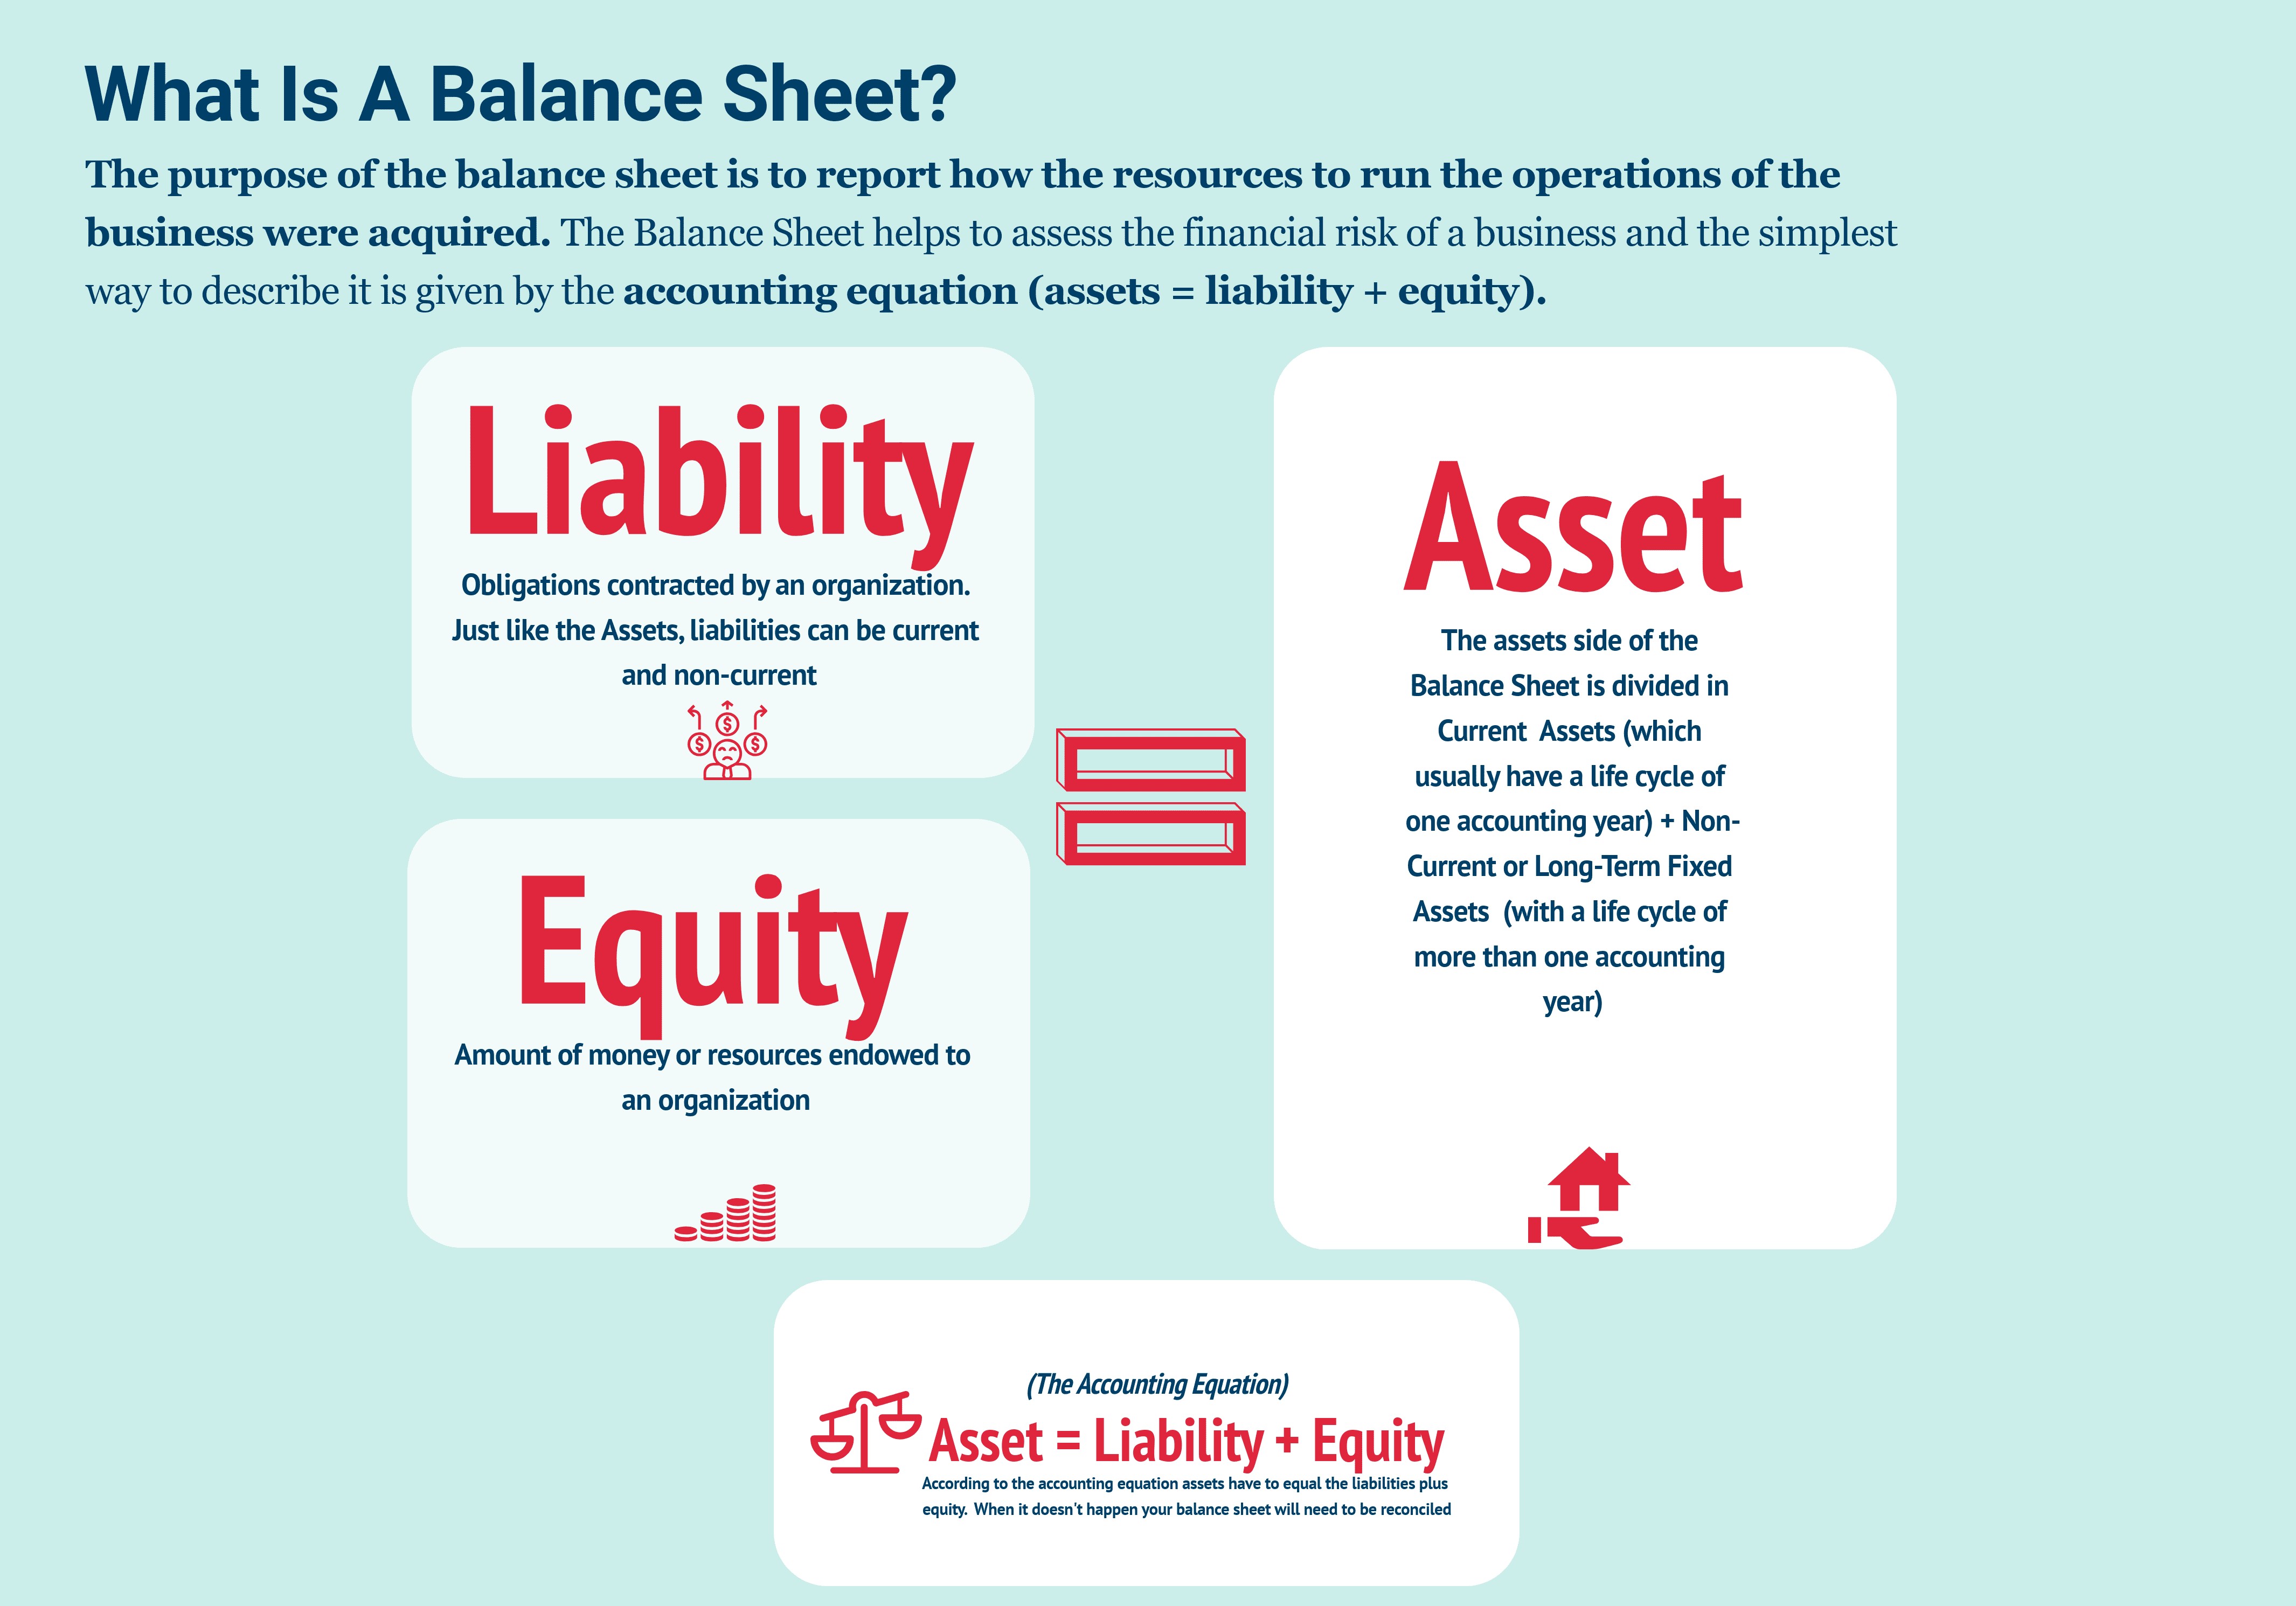 How to Make a Balance Sheet?